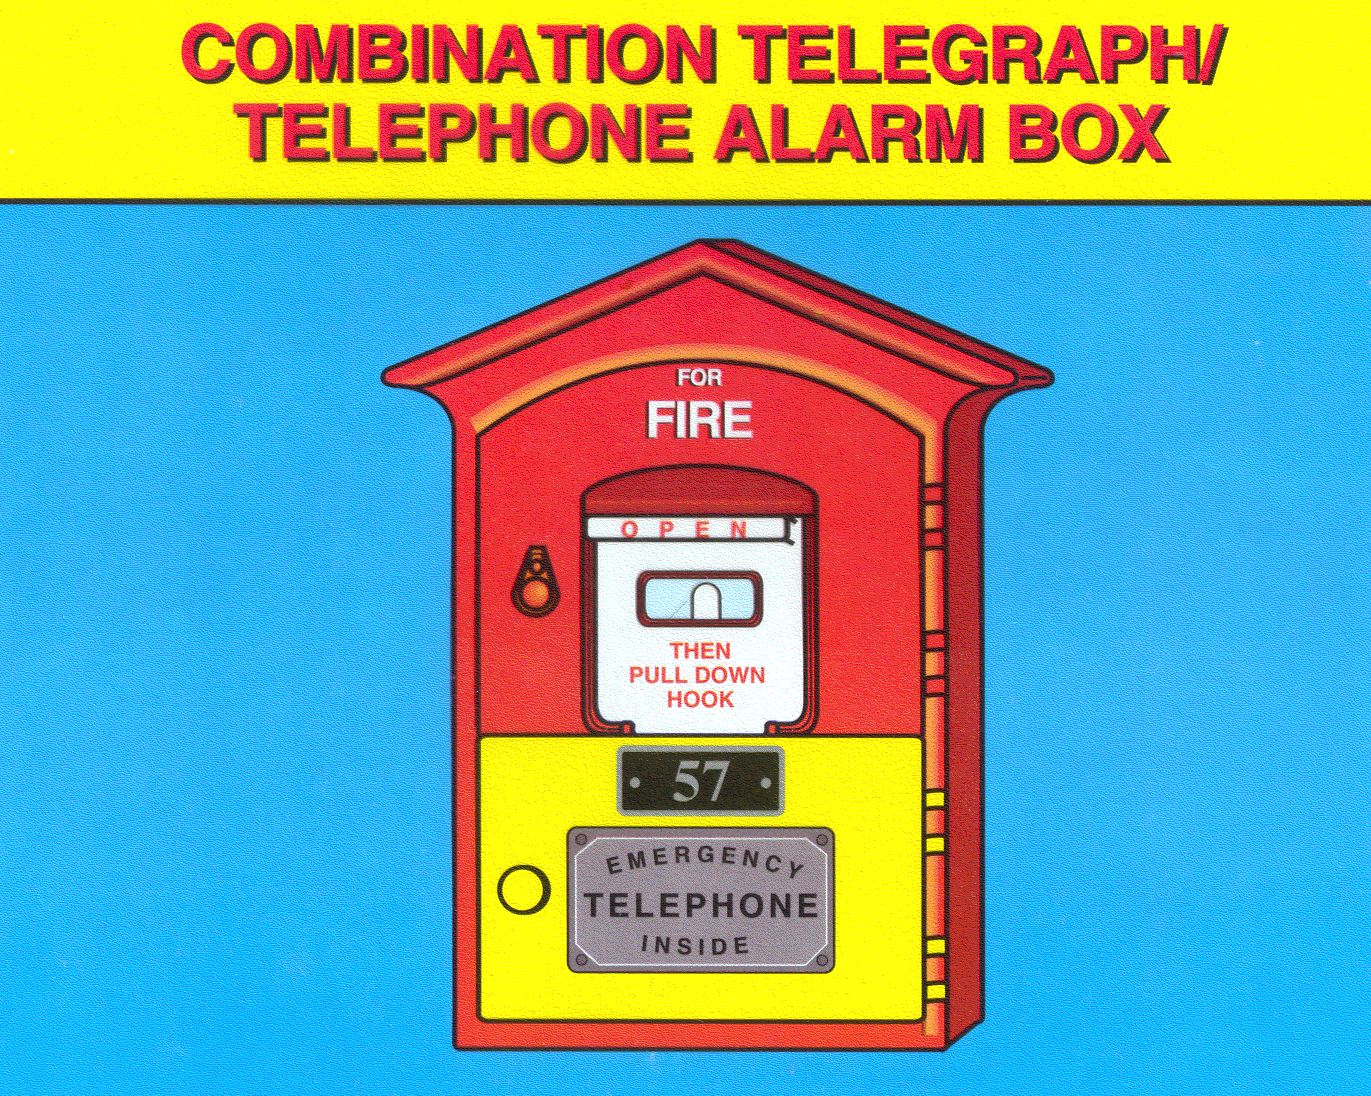 Compination Telegraph / Telephone Alarm Box